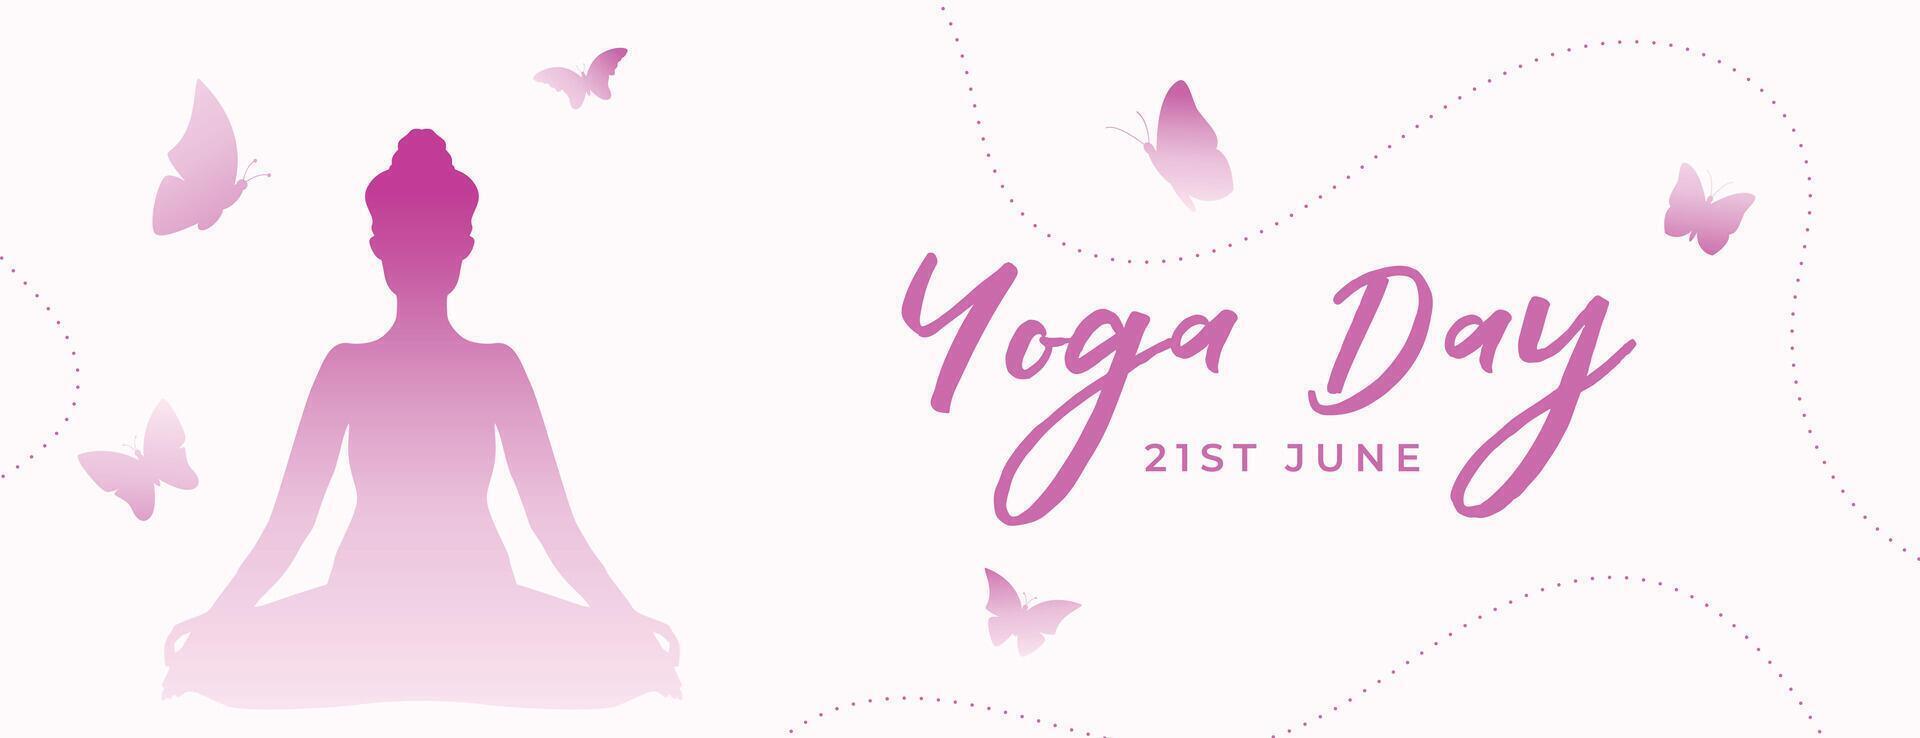 modern 21:e juni yoga dag händelse baner med söt fjäril design vektor